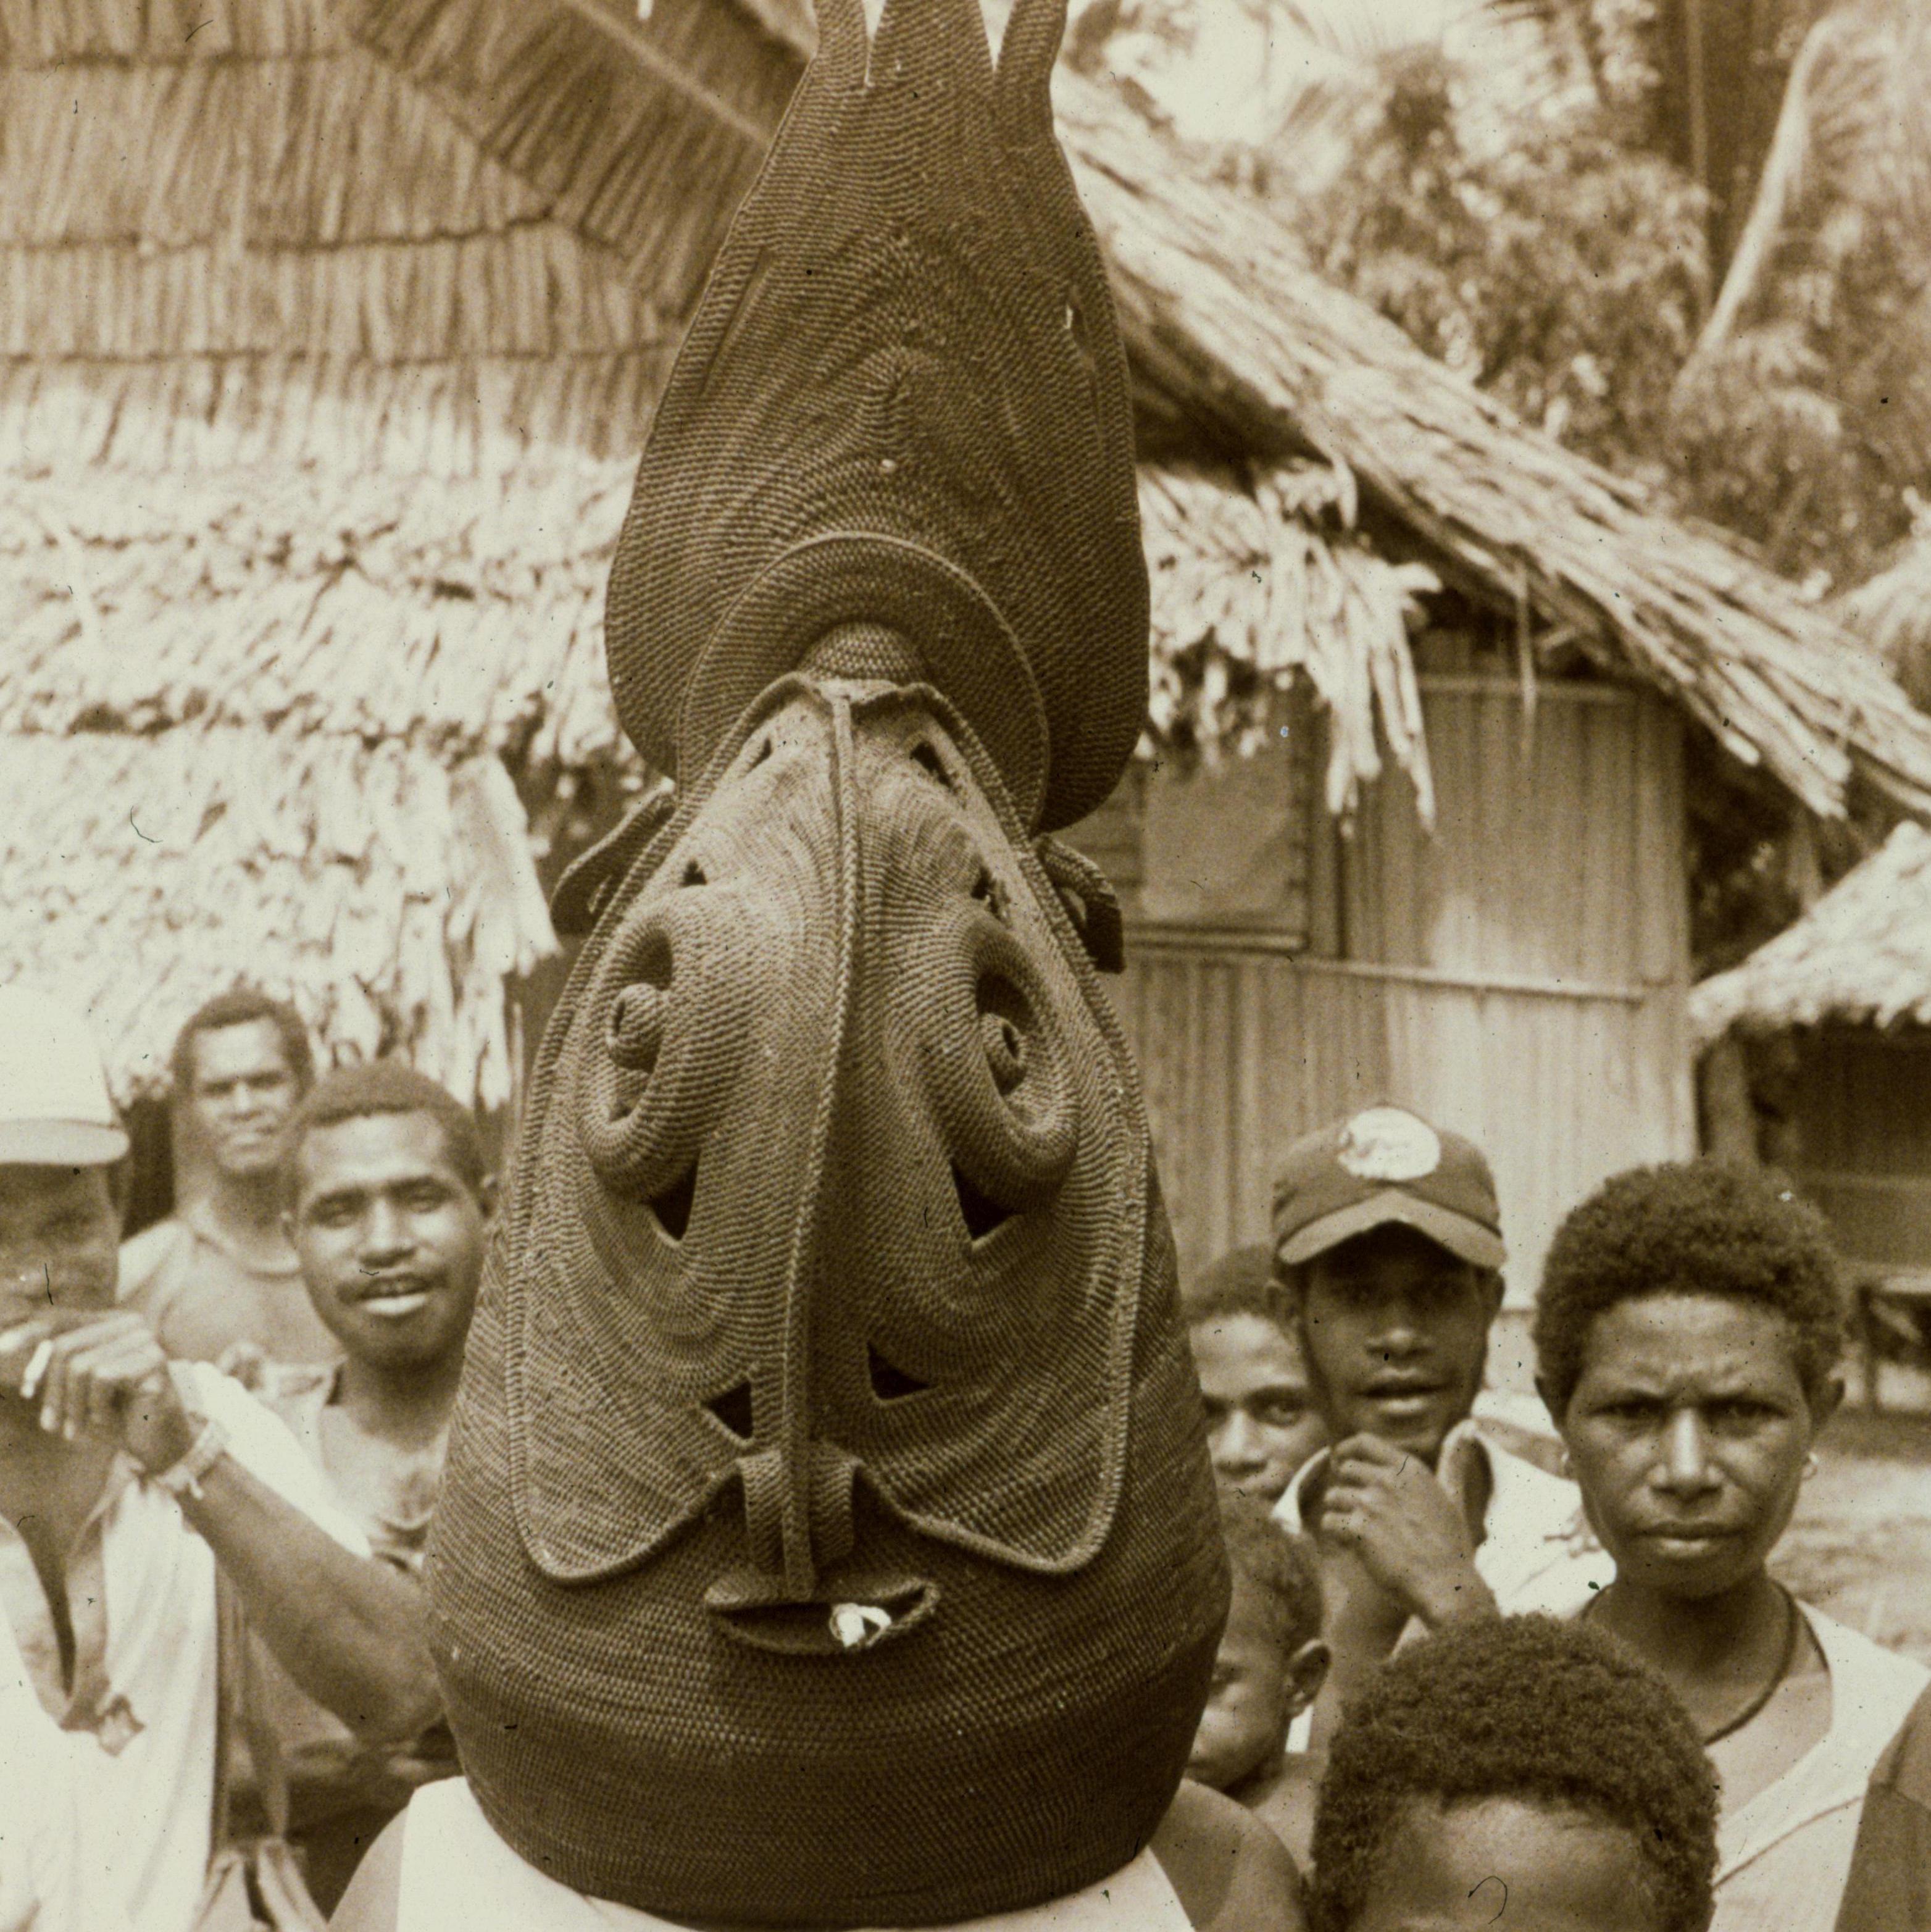 Smoking Bapa, New Guinea Art, Oceanic Art, Tribal Art, South Pacific Collecting